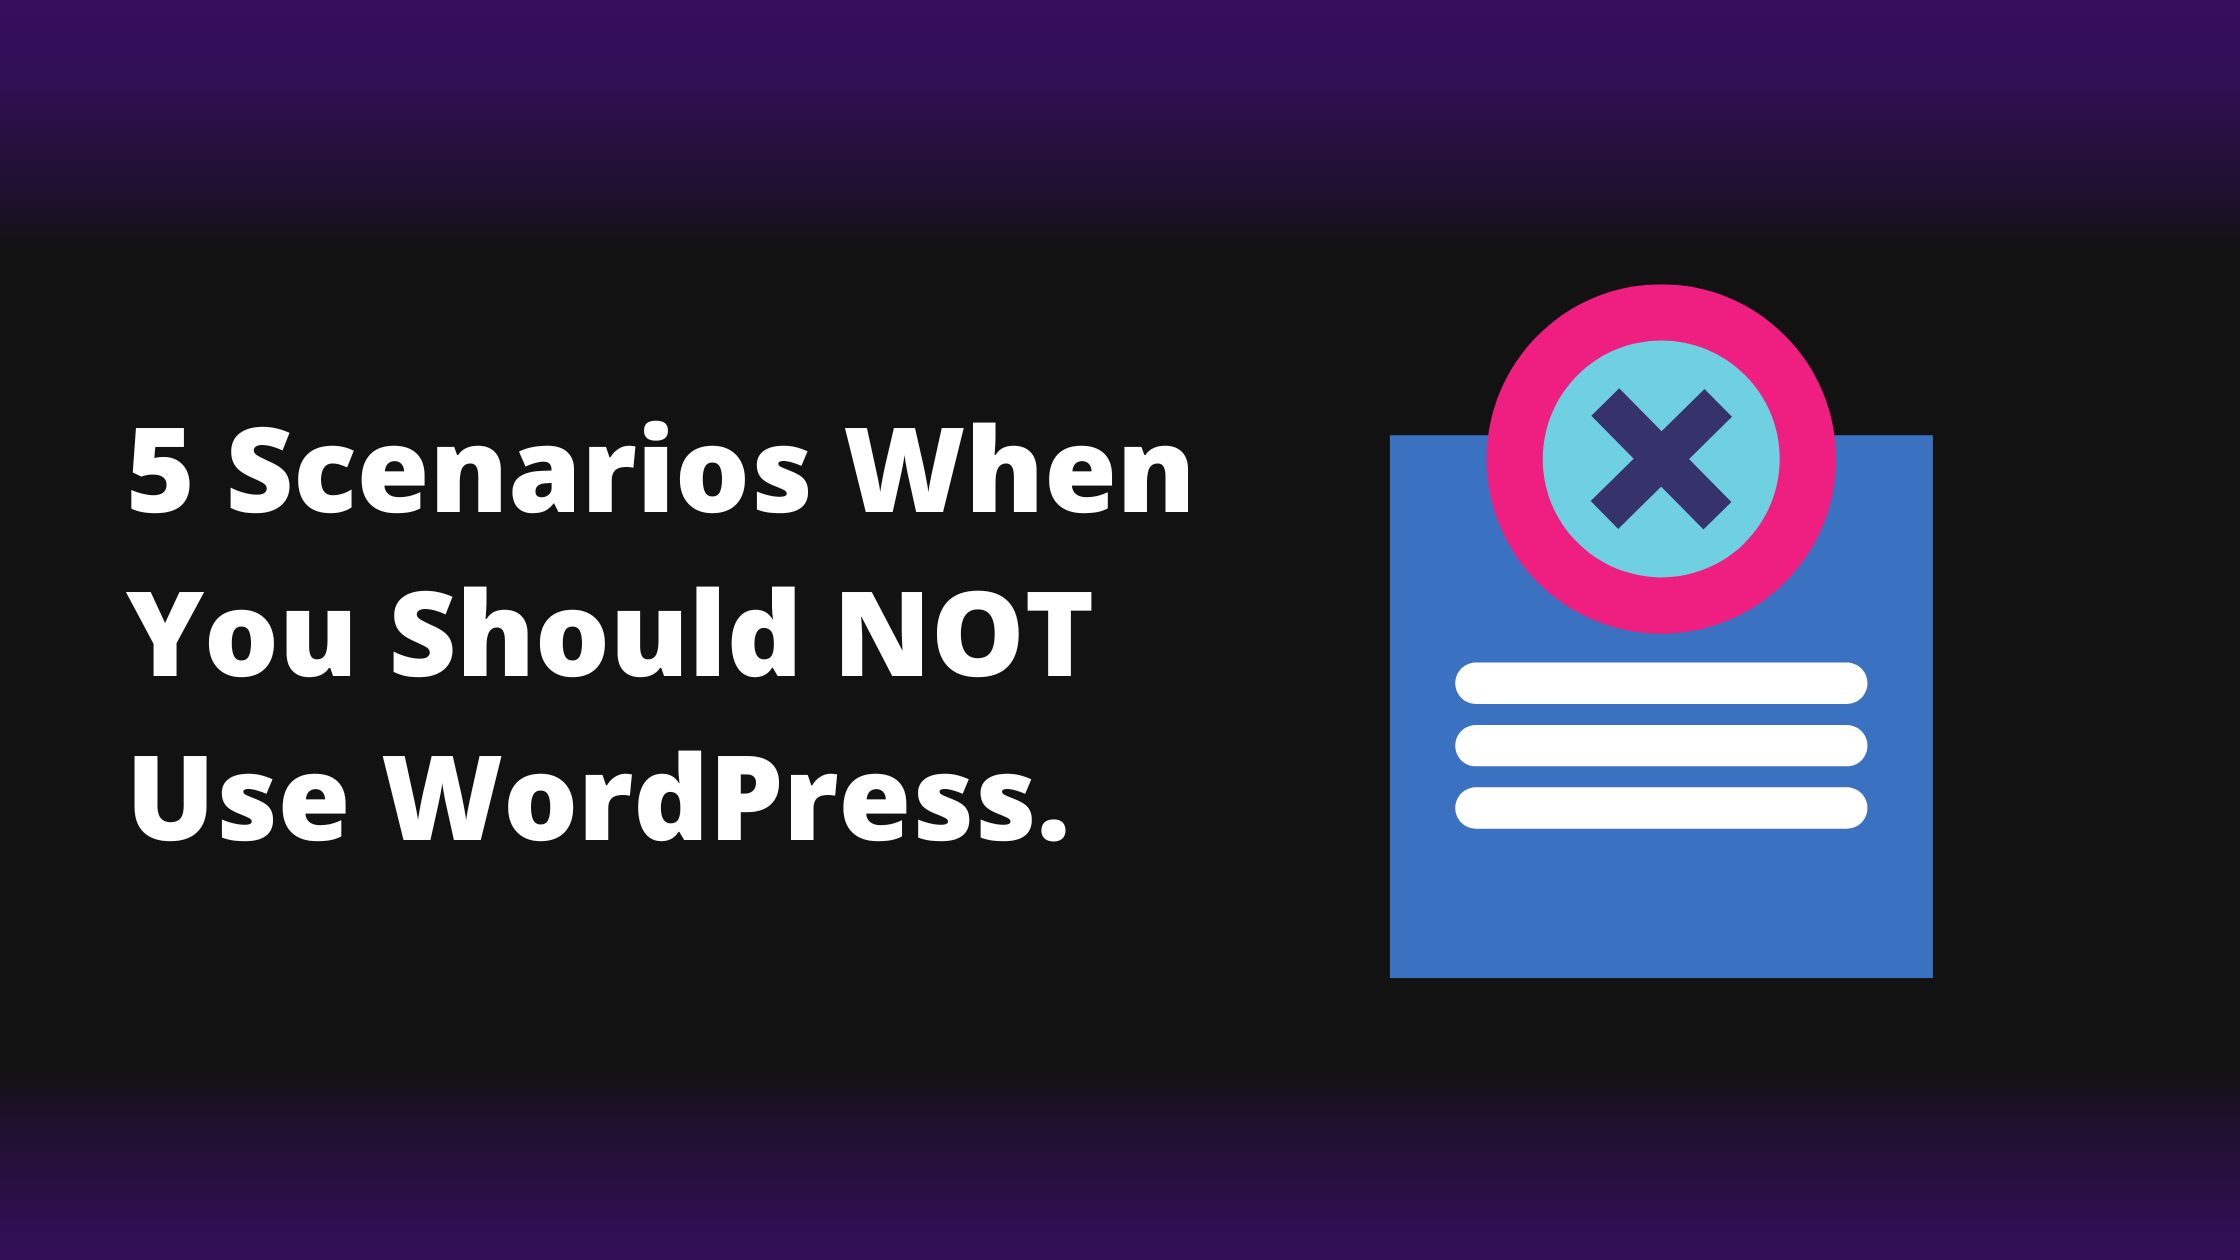 5 scenarios when you should not use WordPress